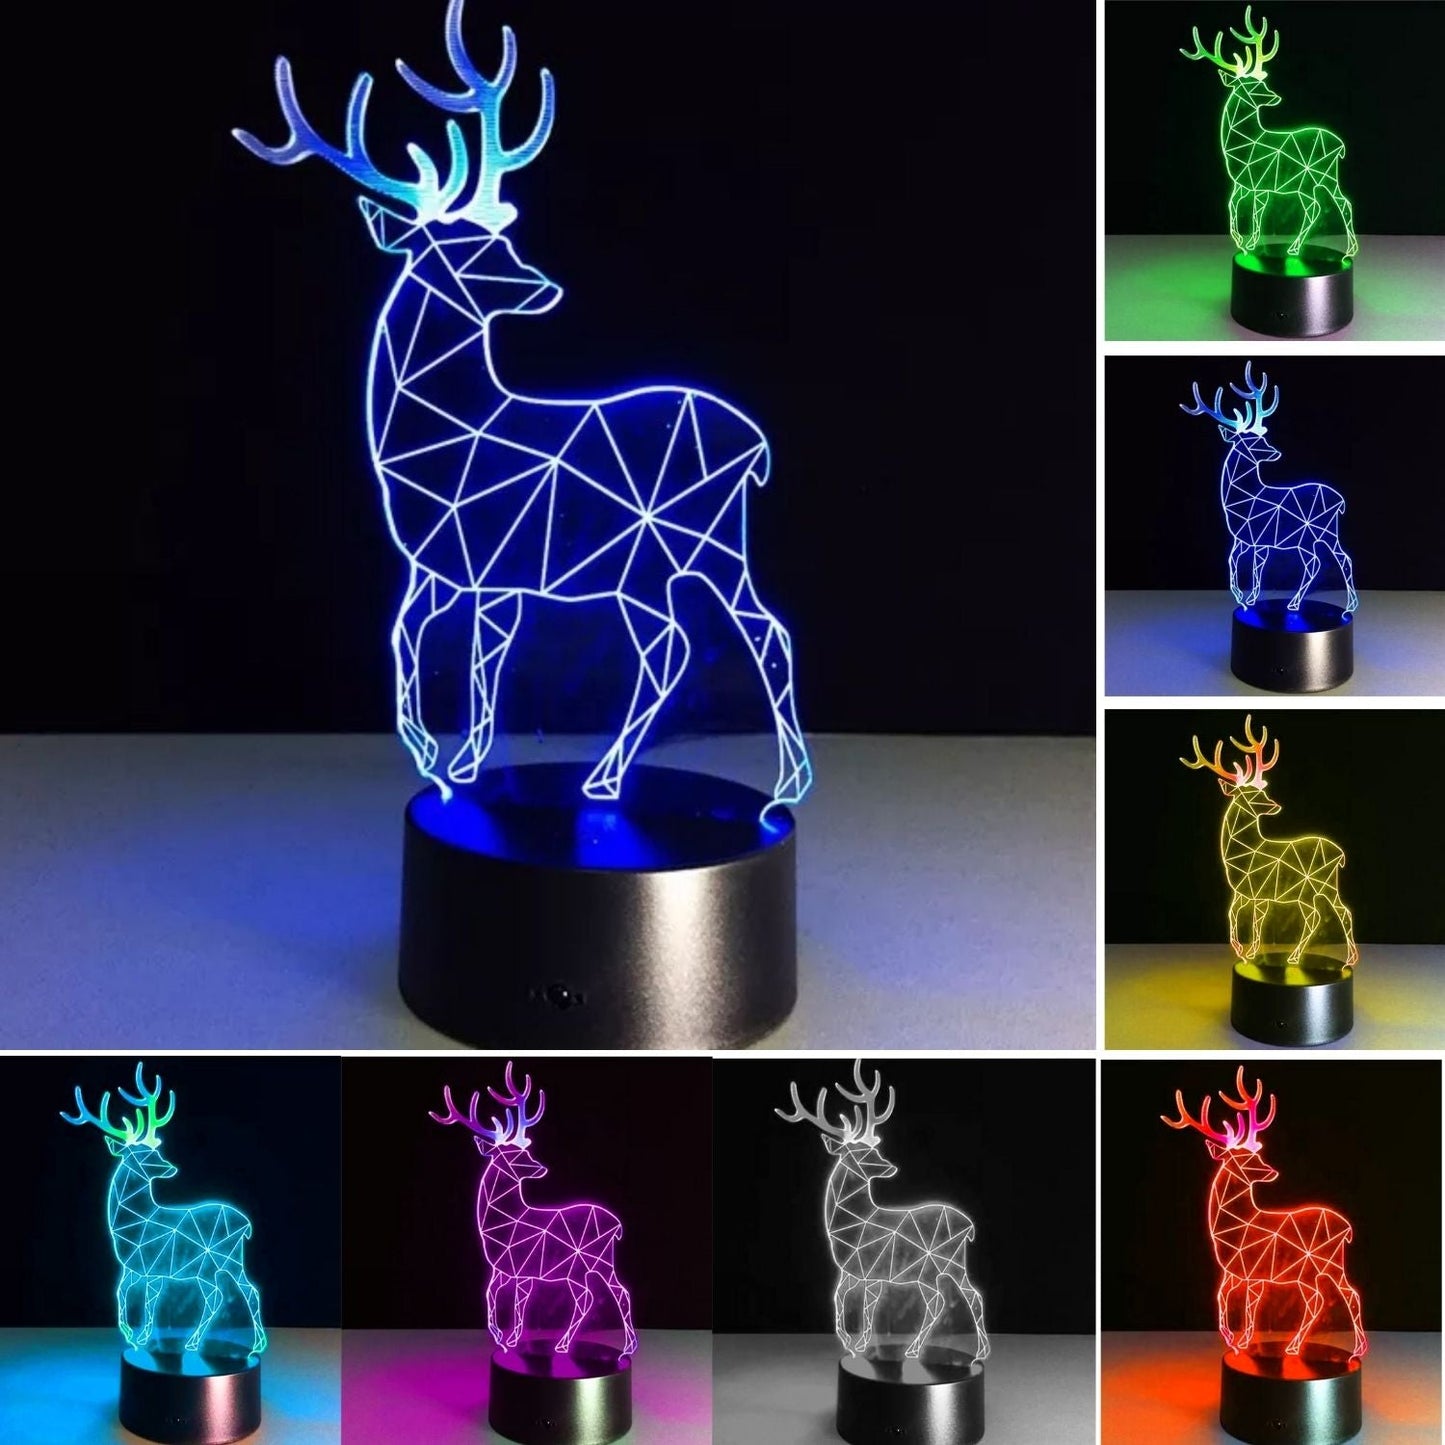 3D Illusion Deer Led Lamp 3D Illusion Led lamp- Royalkart - The Urban Store